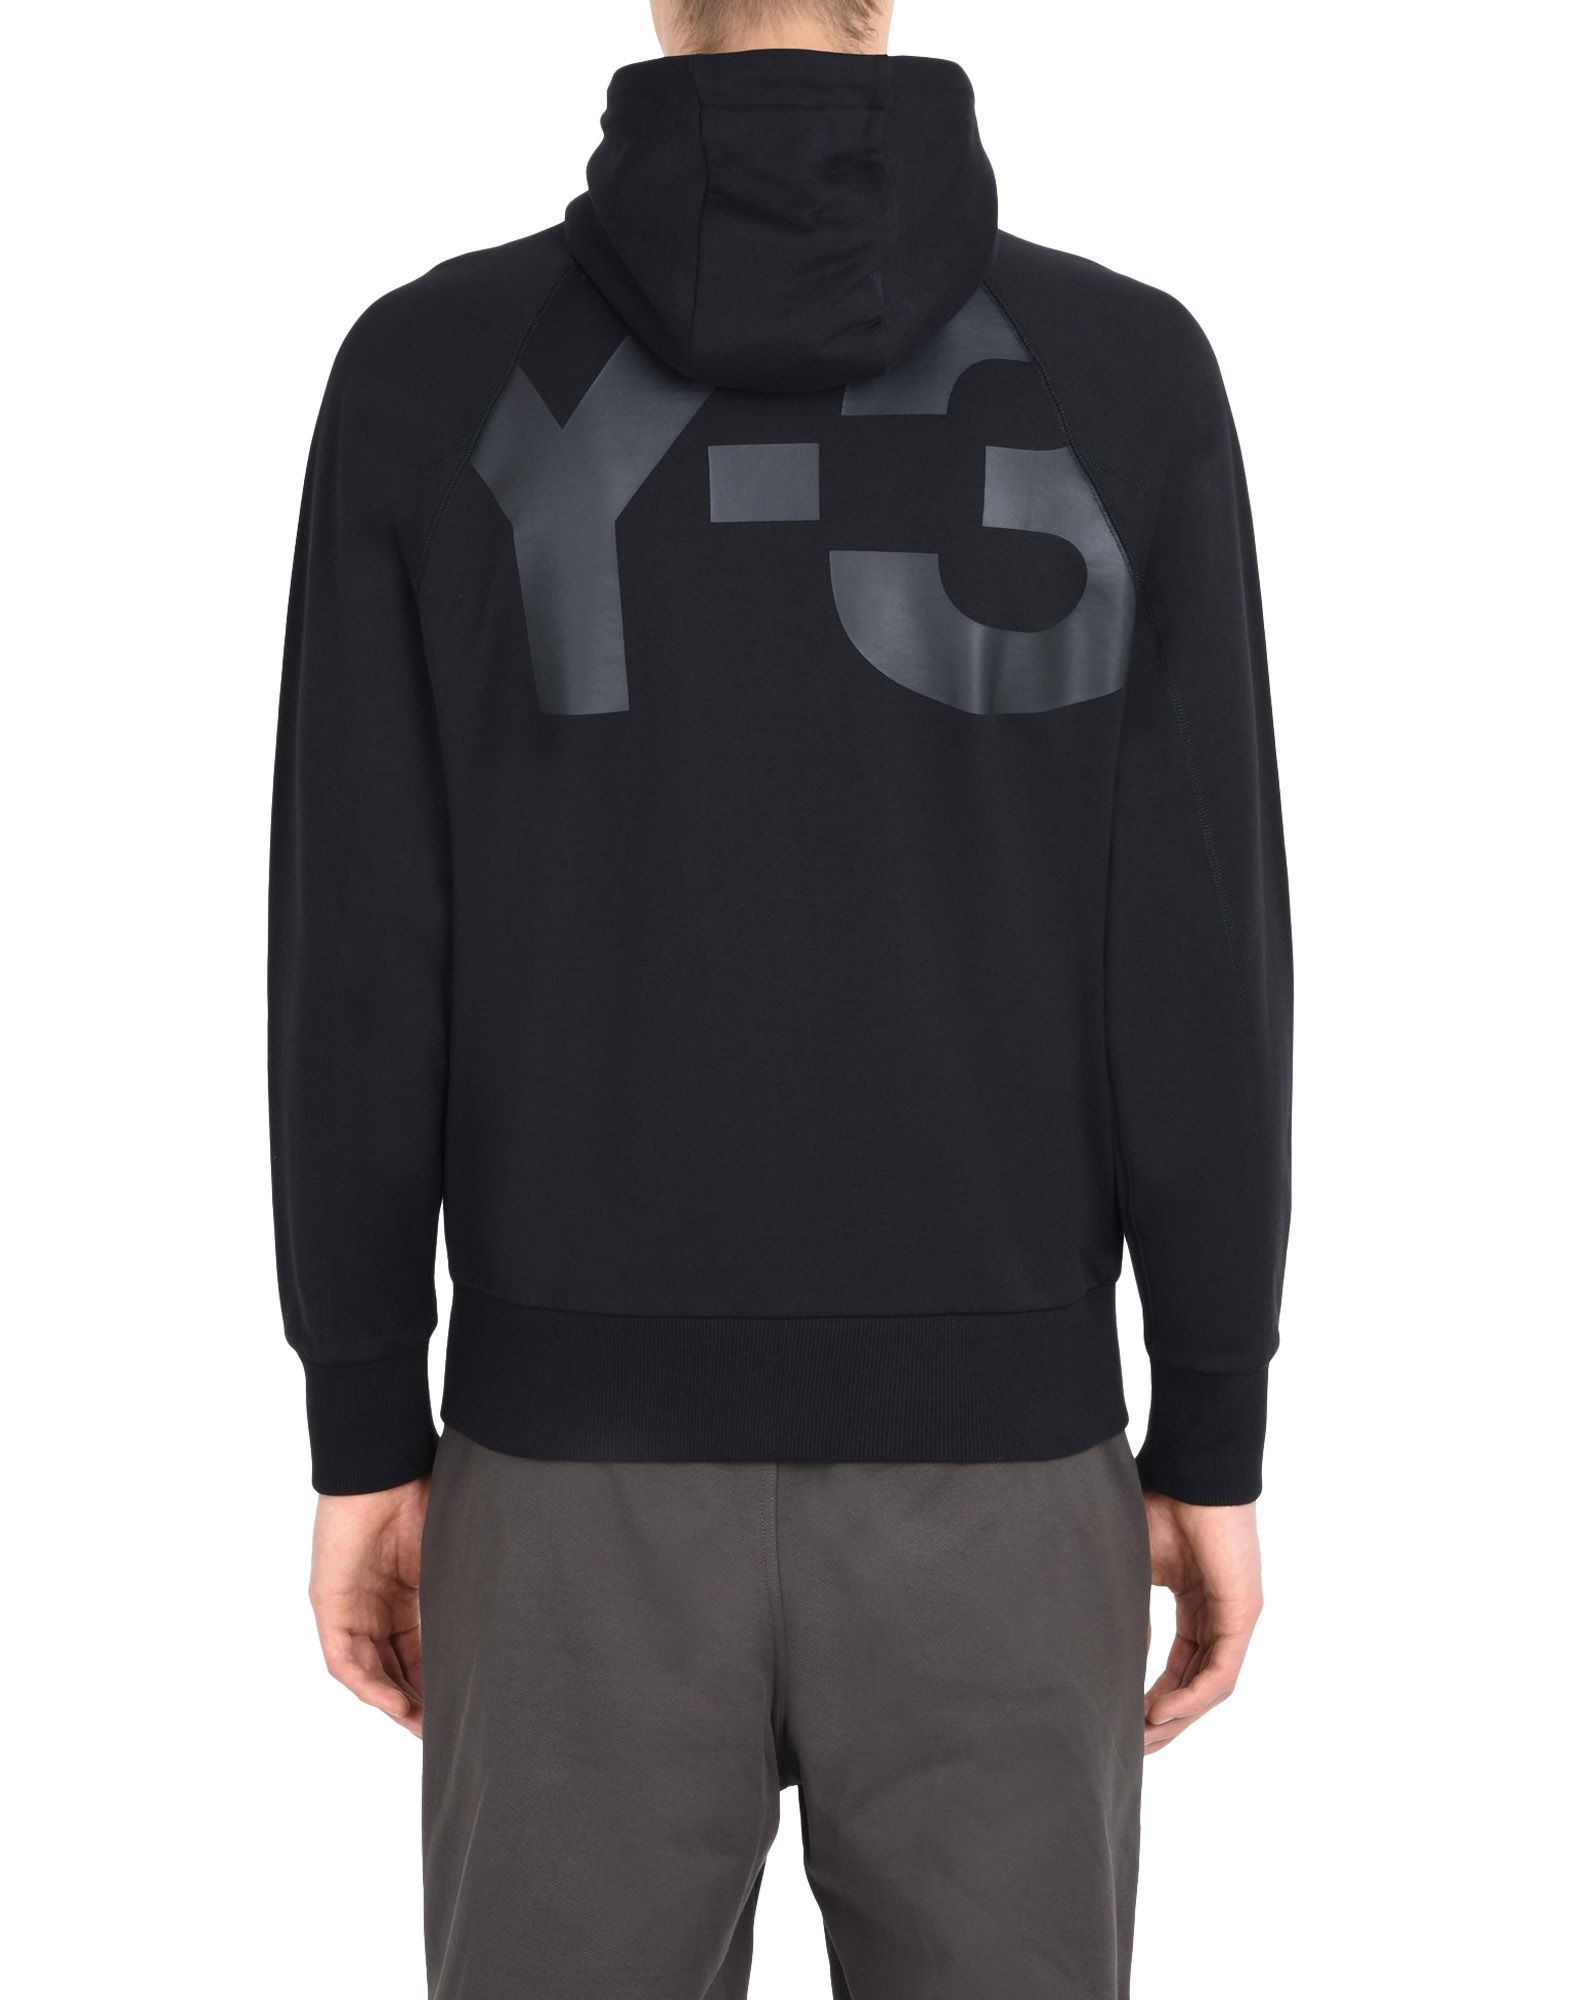 Y 3 CLASSIC ZIP HOODIE for Men | Adidas Y-3 Official Store